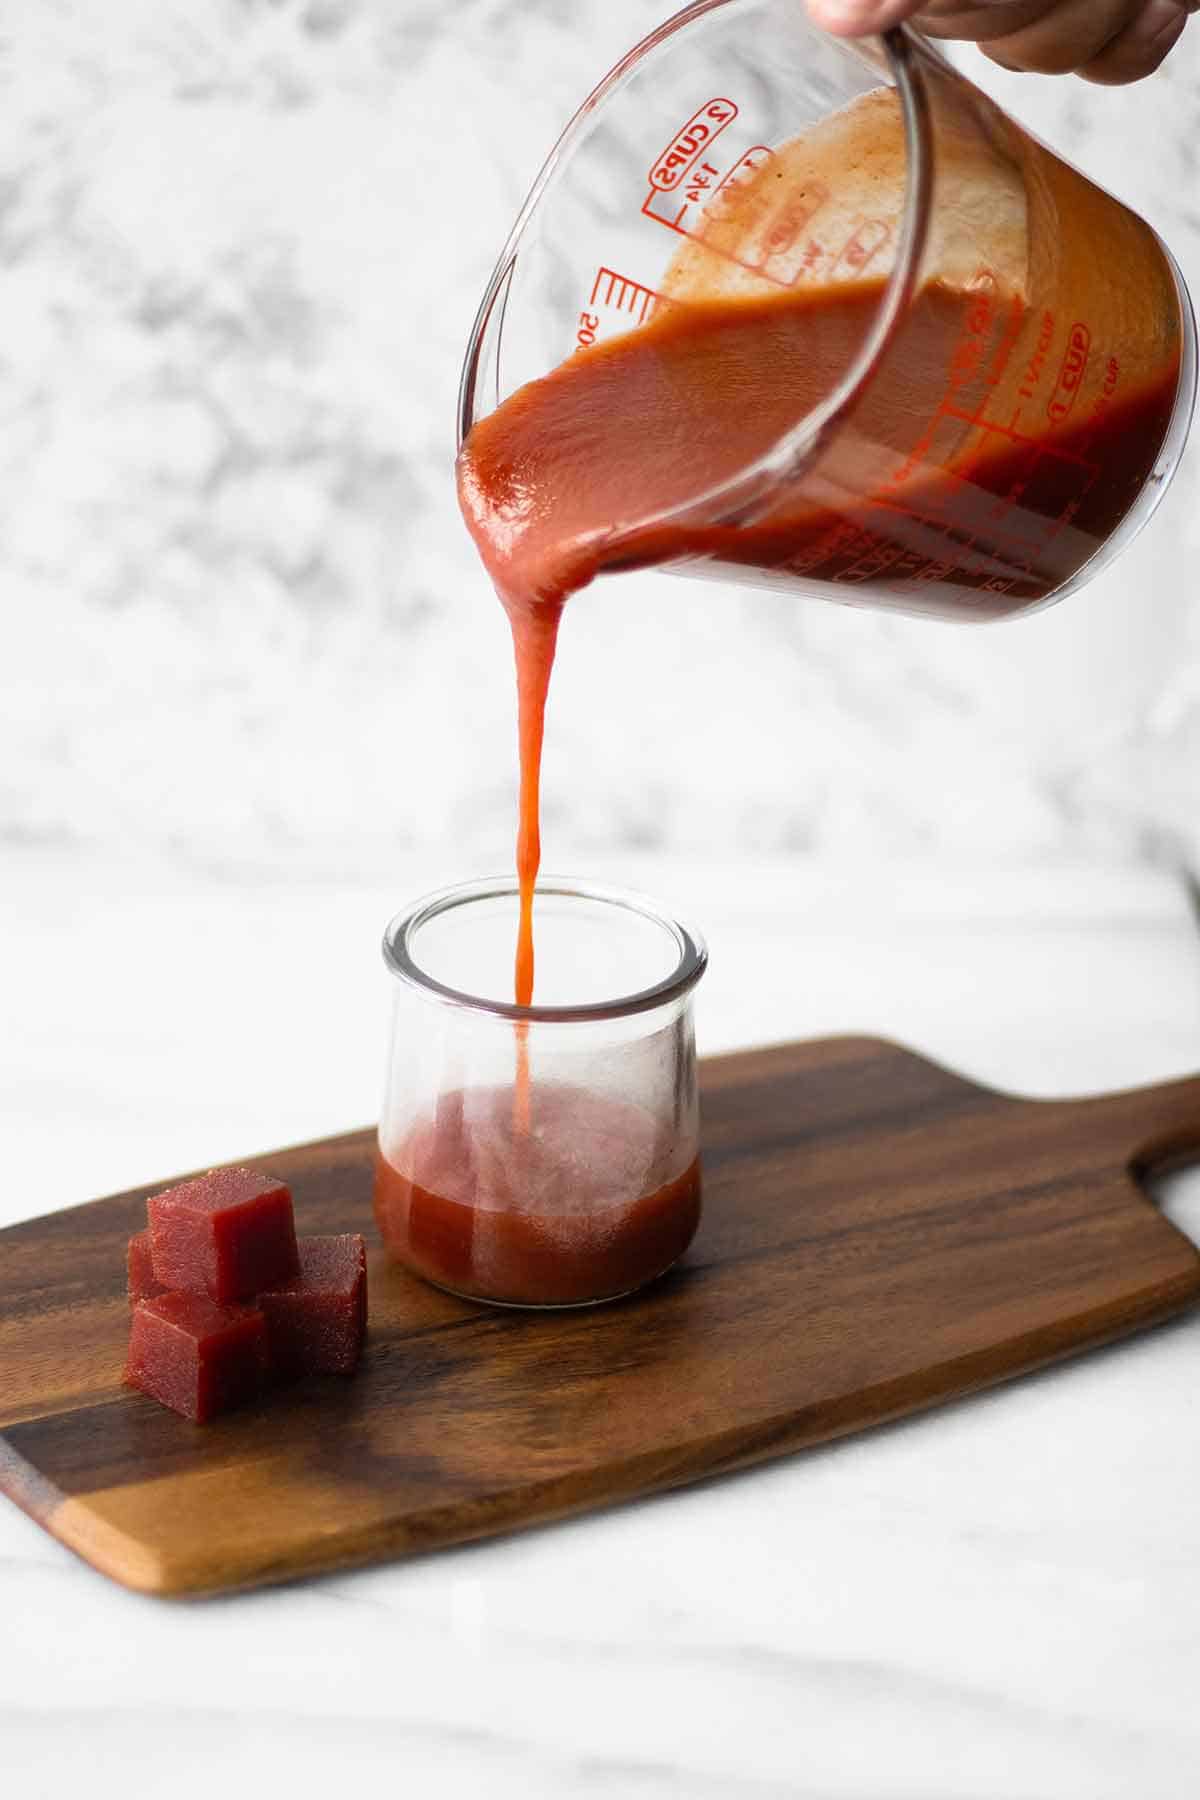 mano hechando salsa de guayaba de un envase grande a un envase pequeno.